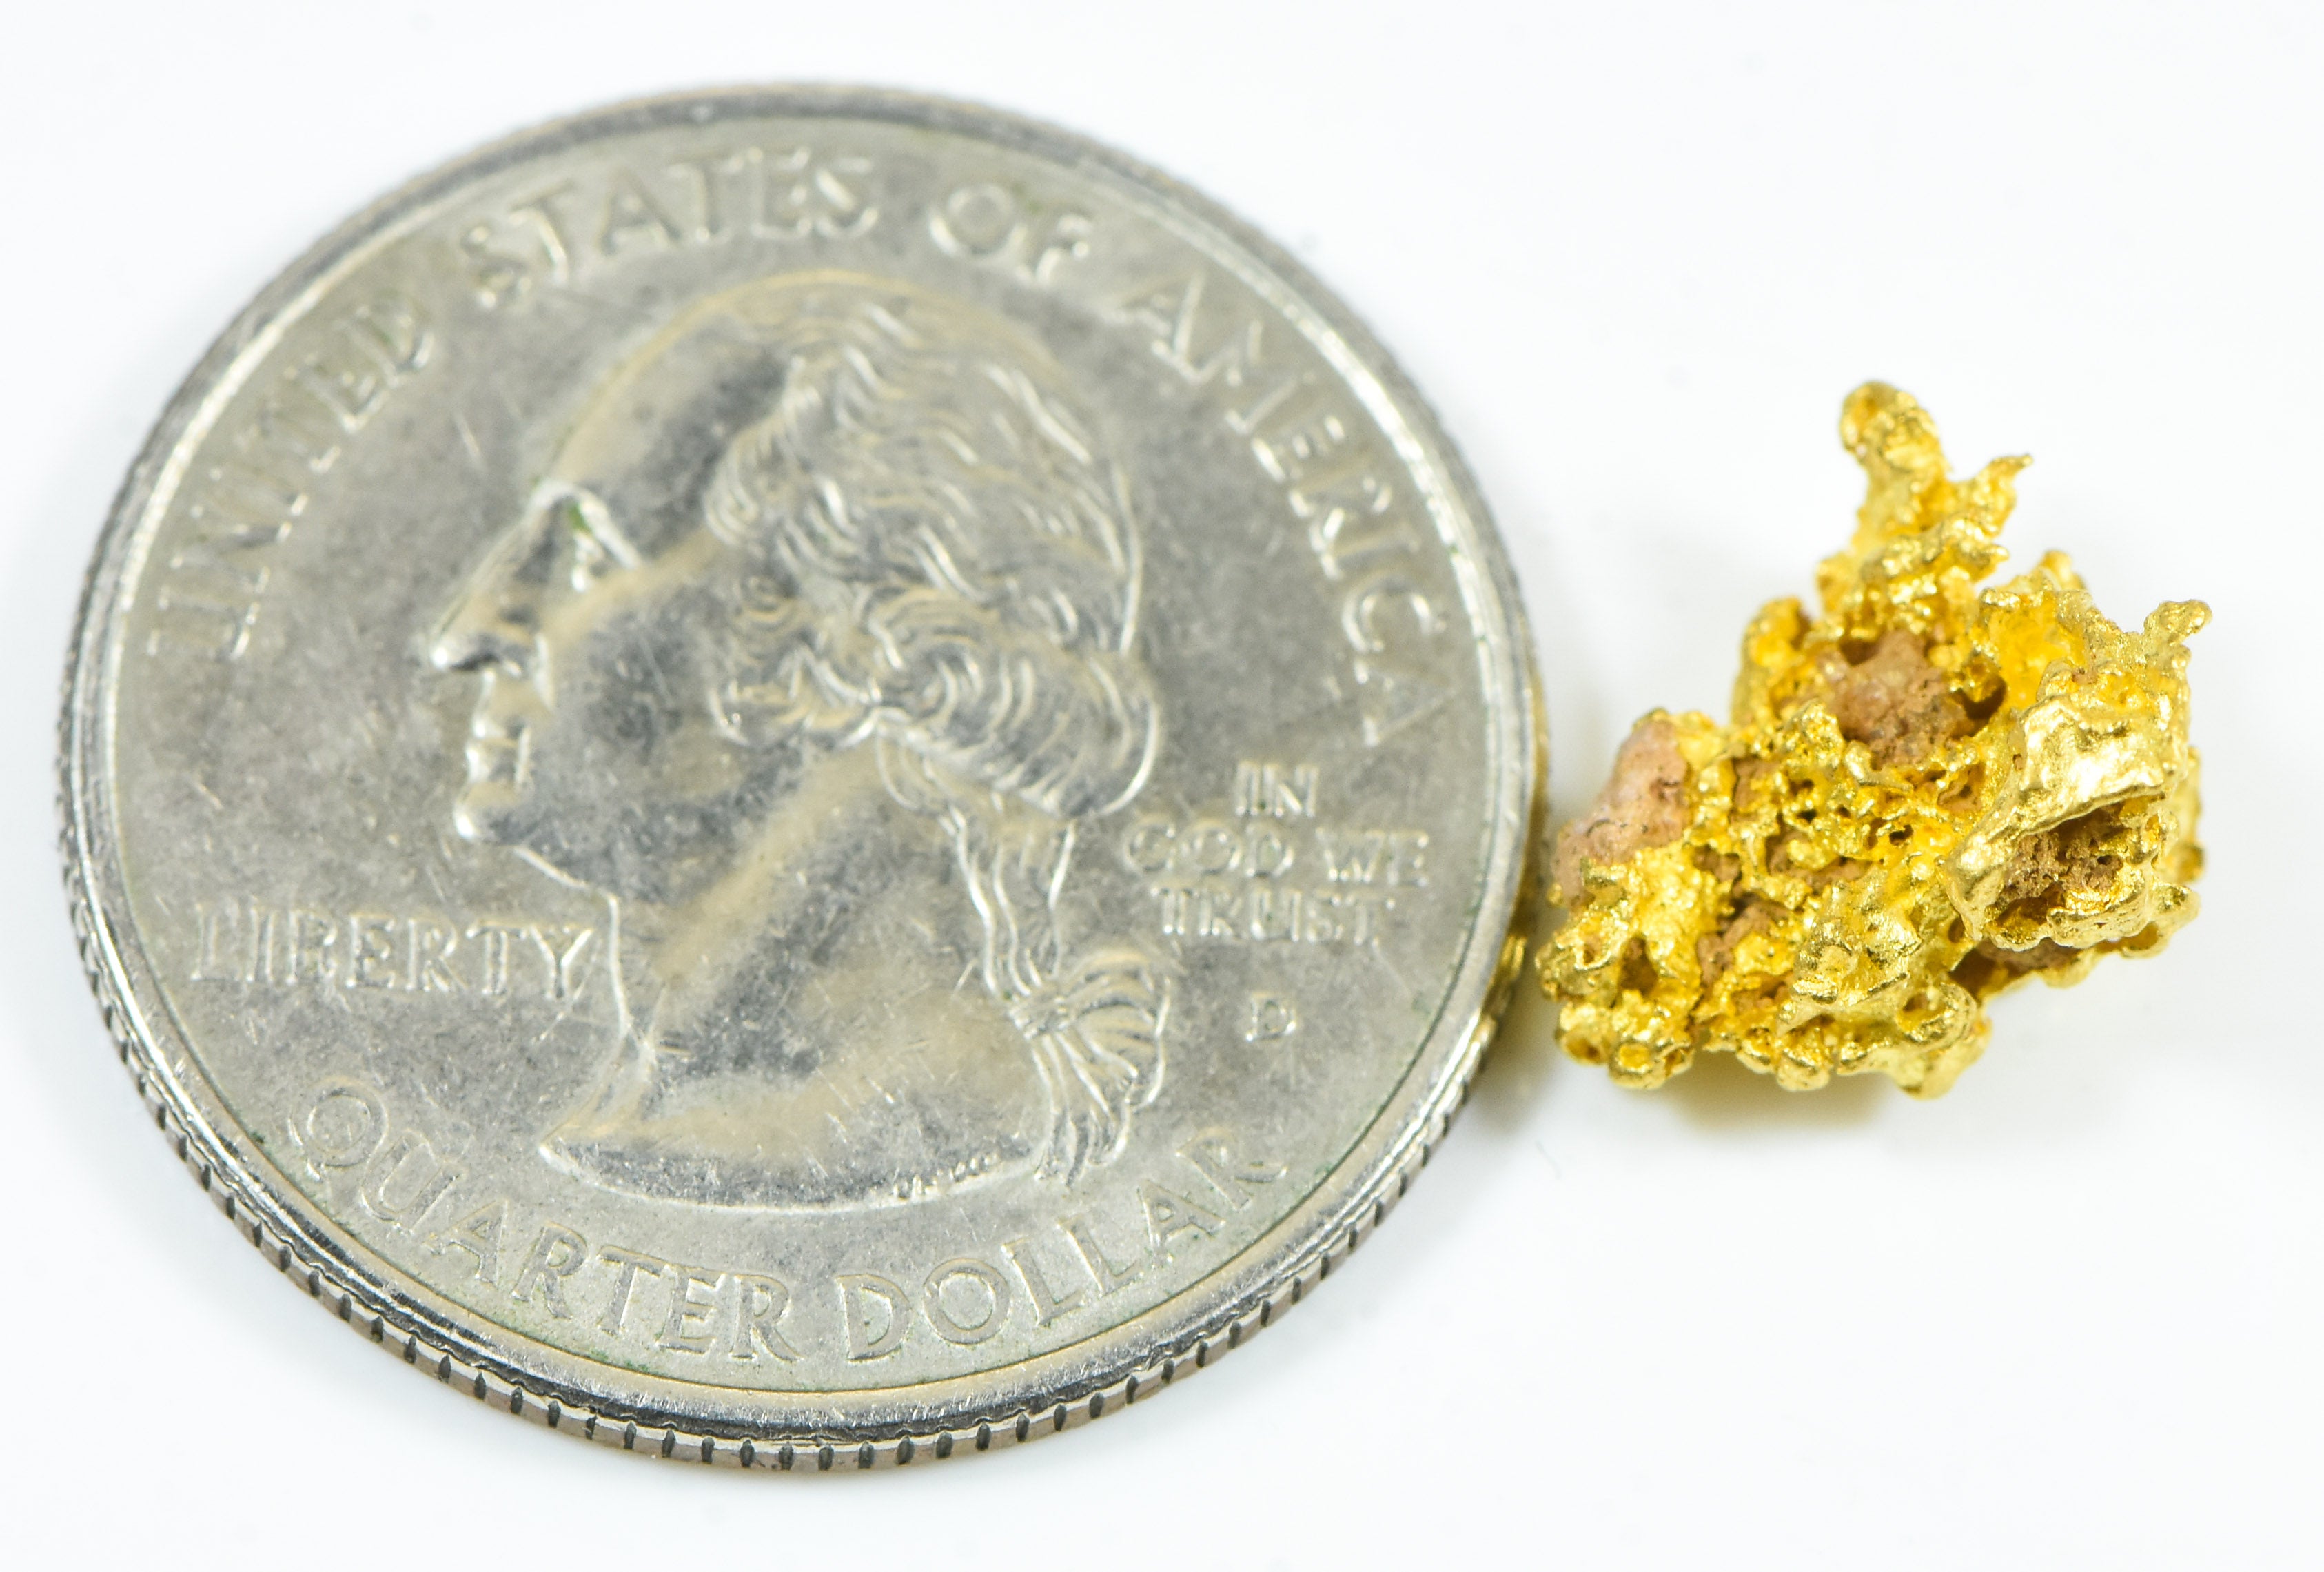 #1007 Natural Gold Nugget Australian 2.29 Grams Genuine